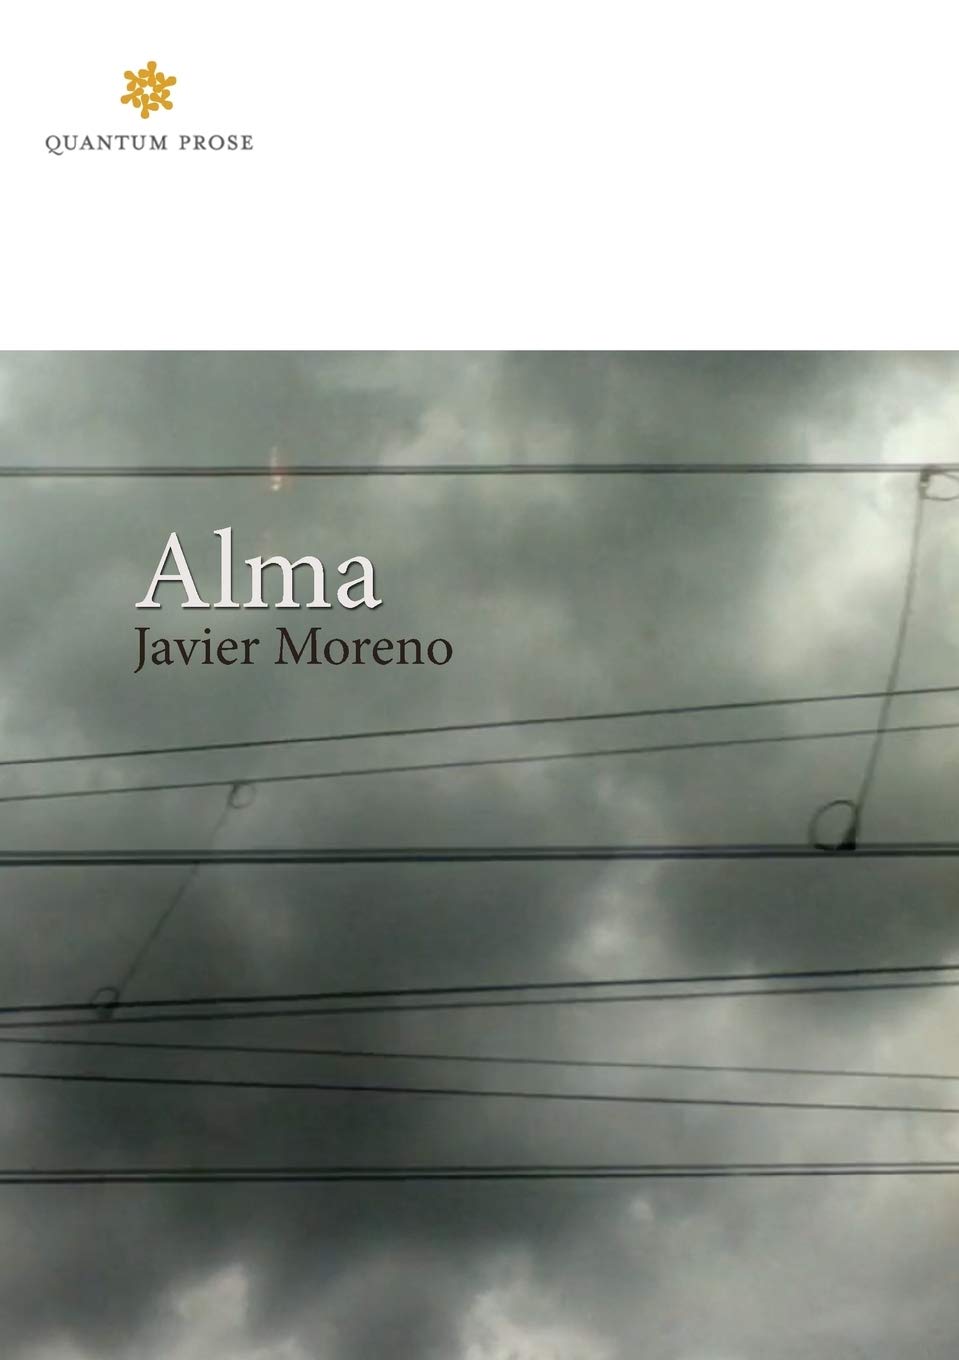 Alma by Javier Moreno